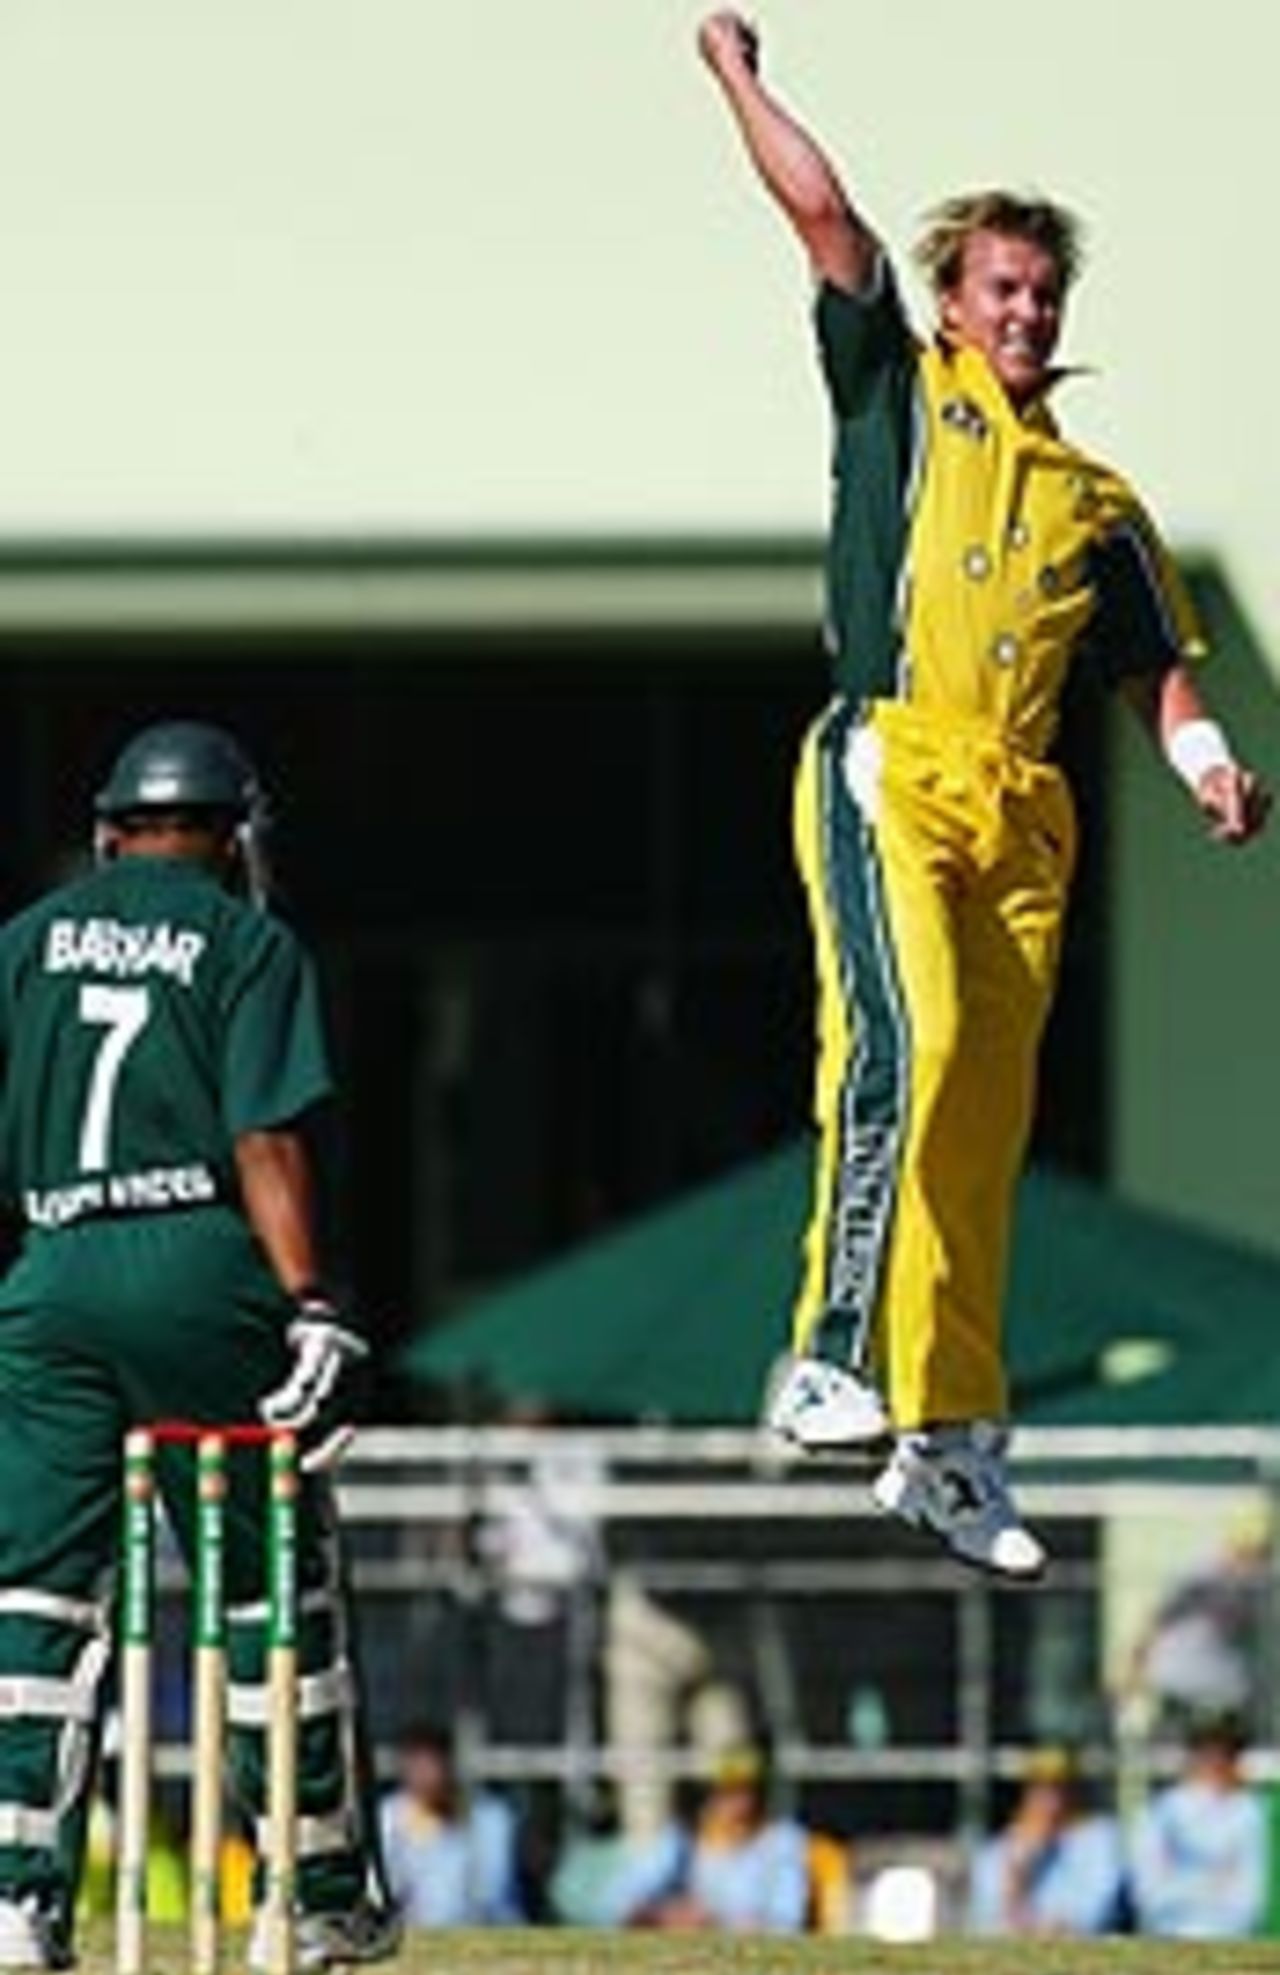 Brett Lee celebrates after dismissing Habibul Bashar in the first ODI between Australia and Bangladesh at Cairns